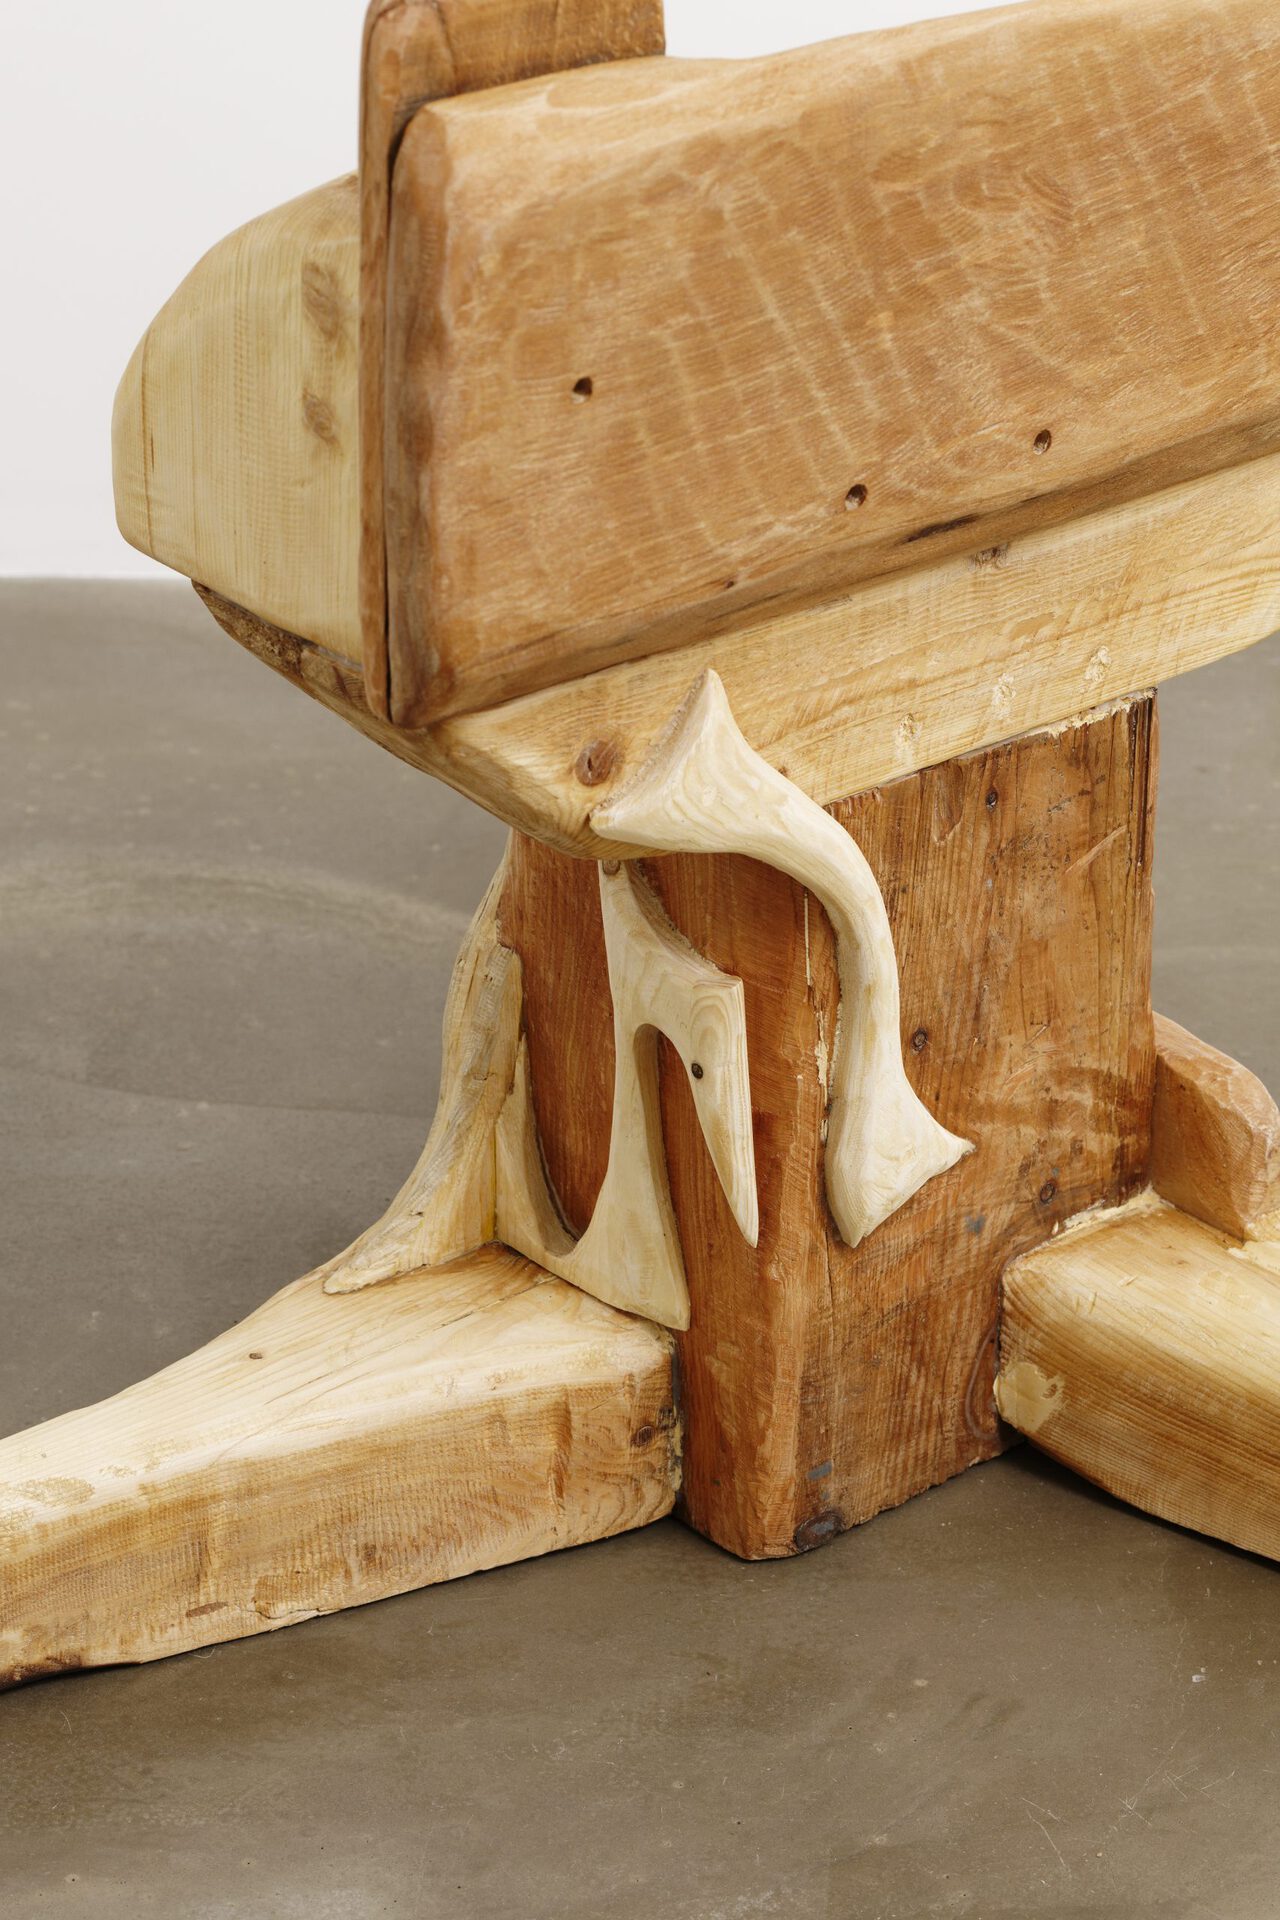 Plinth (detail), 2021, recycled wood chair, 84.5 x 94 x 83 cm, unique